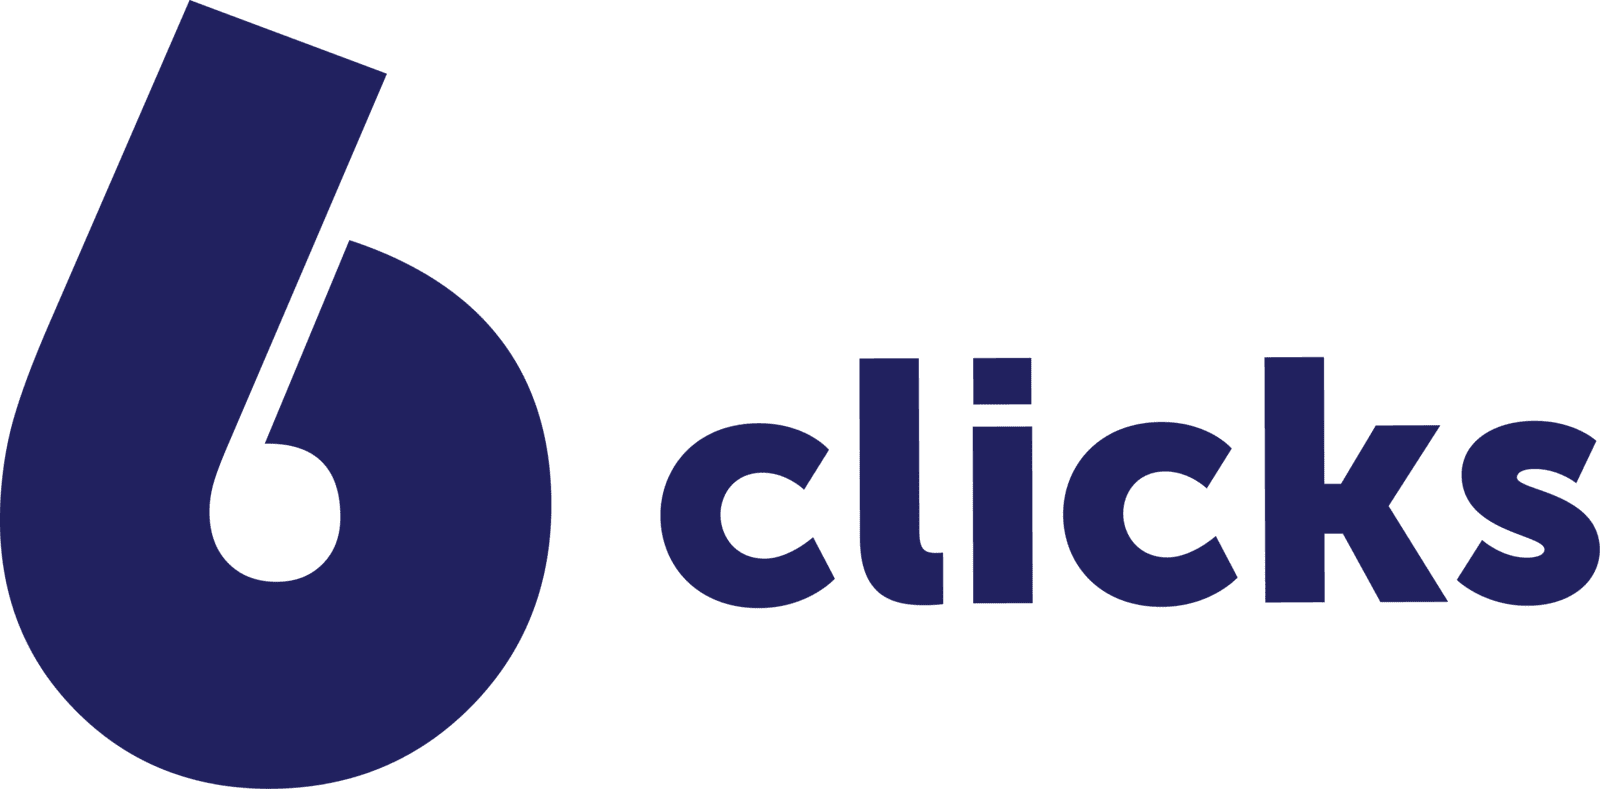 6 Clicks logo